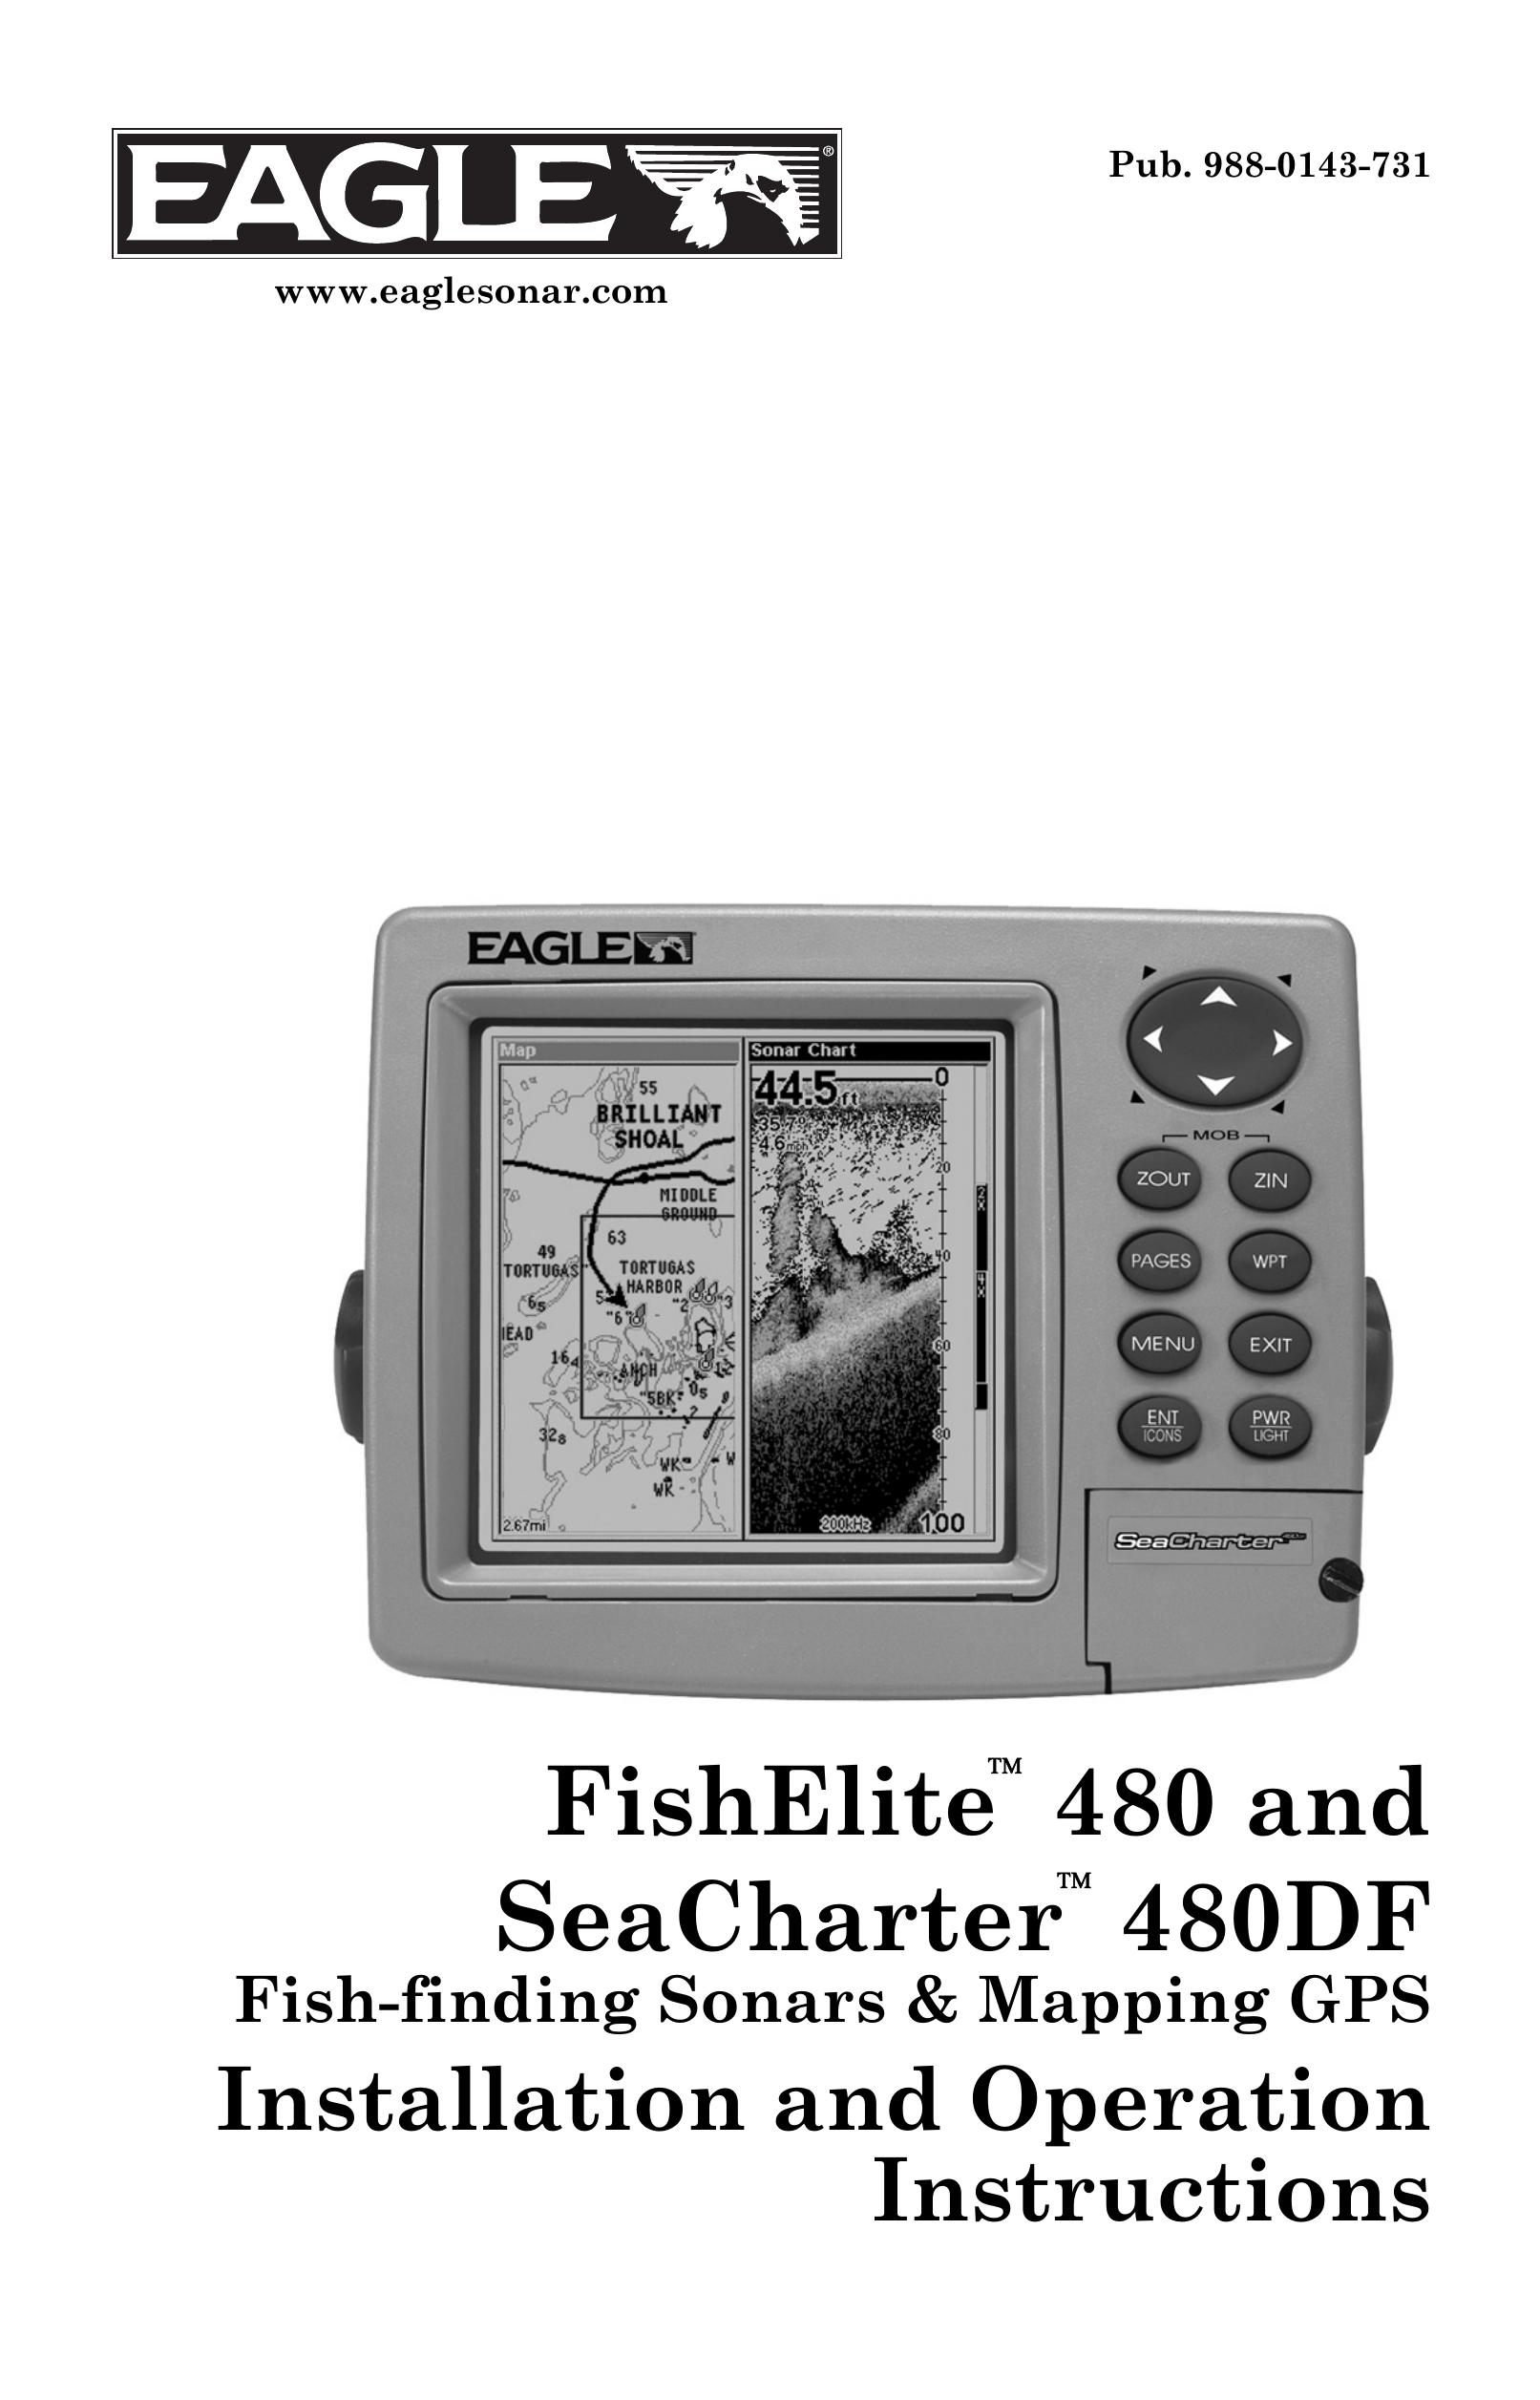 Eagle Electronics 480, 480DF Fish Finder User Manual